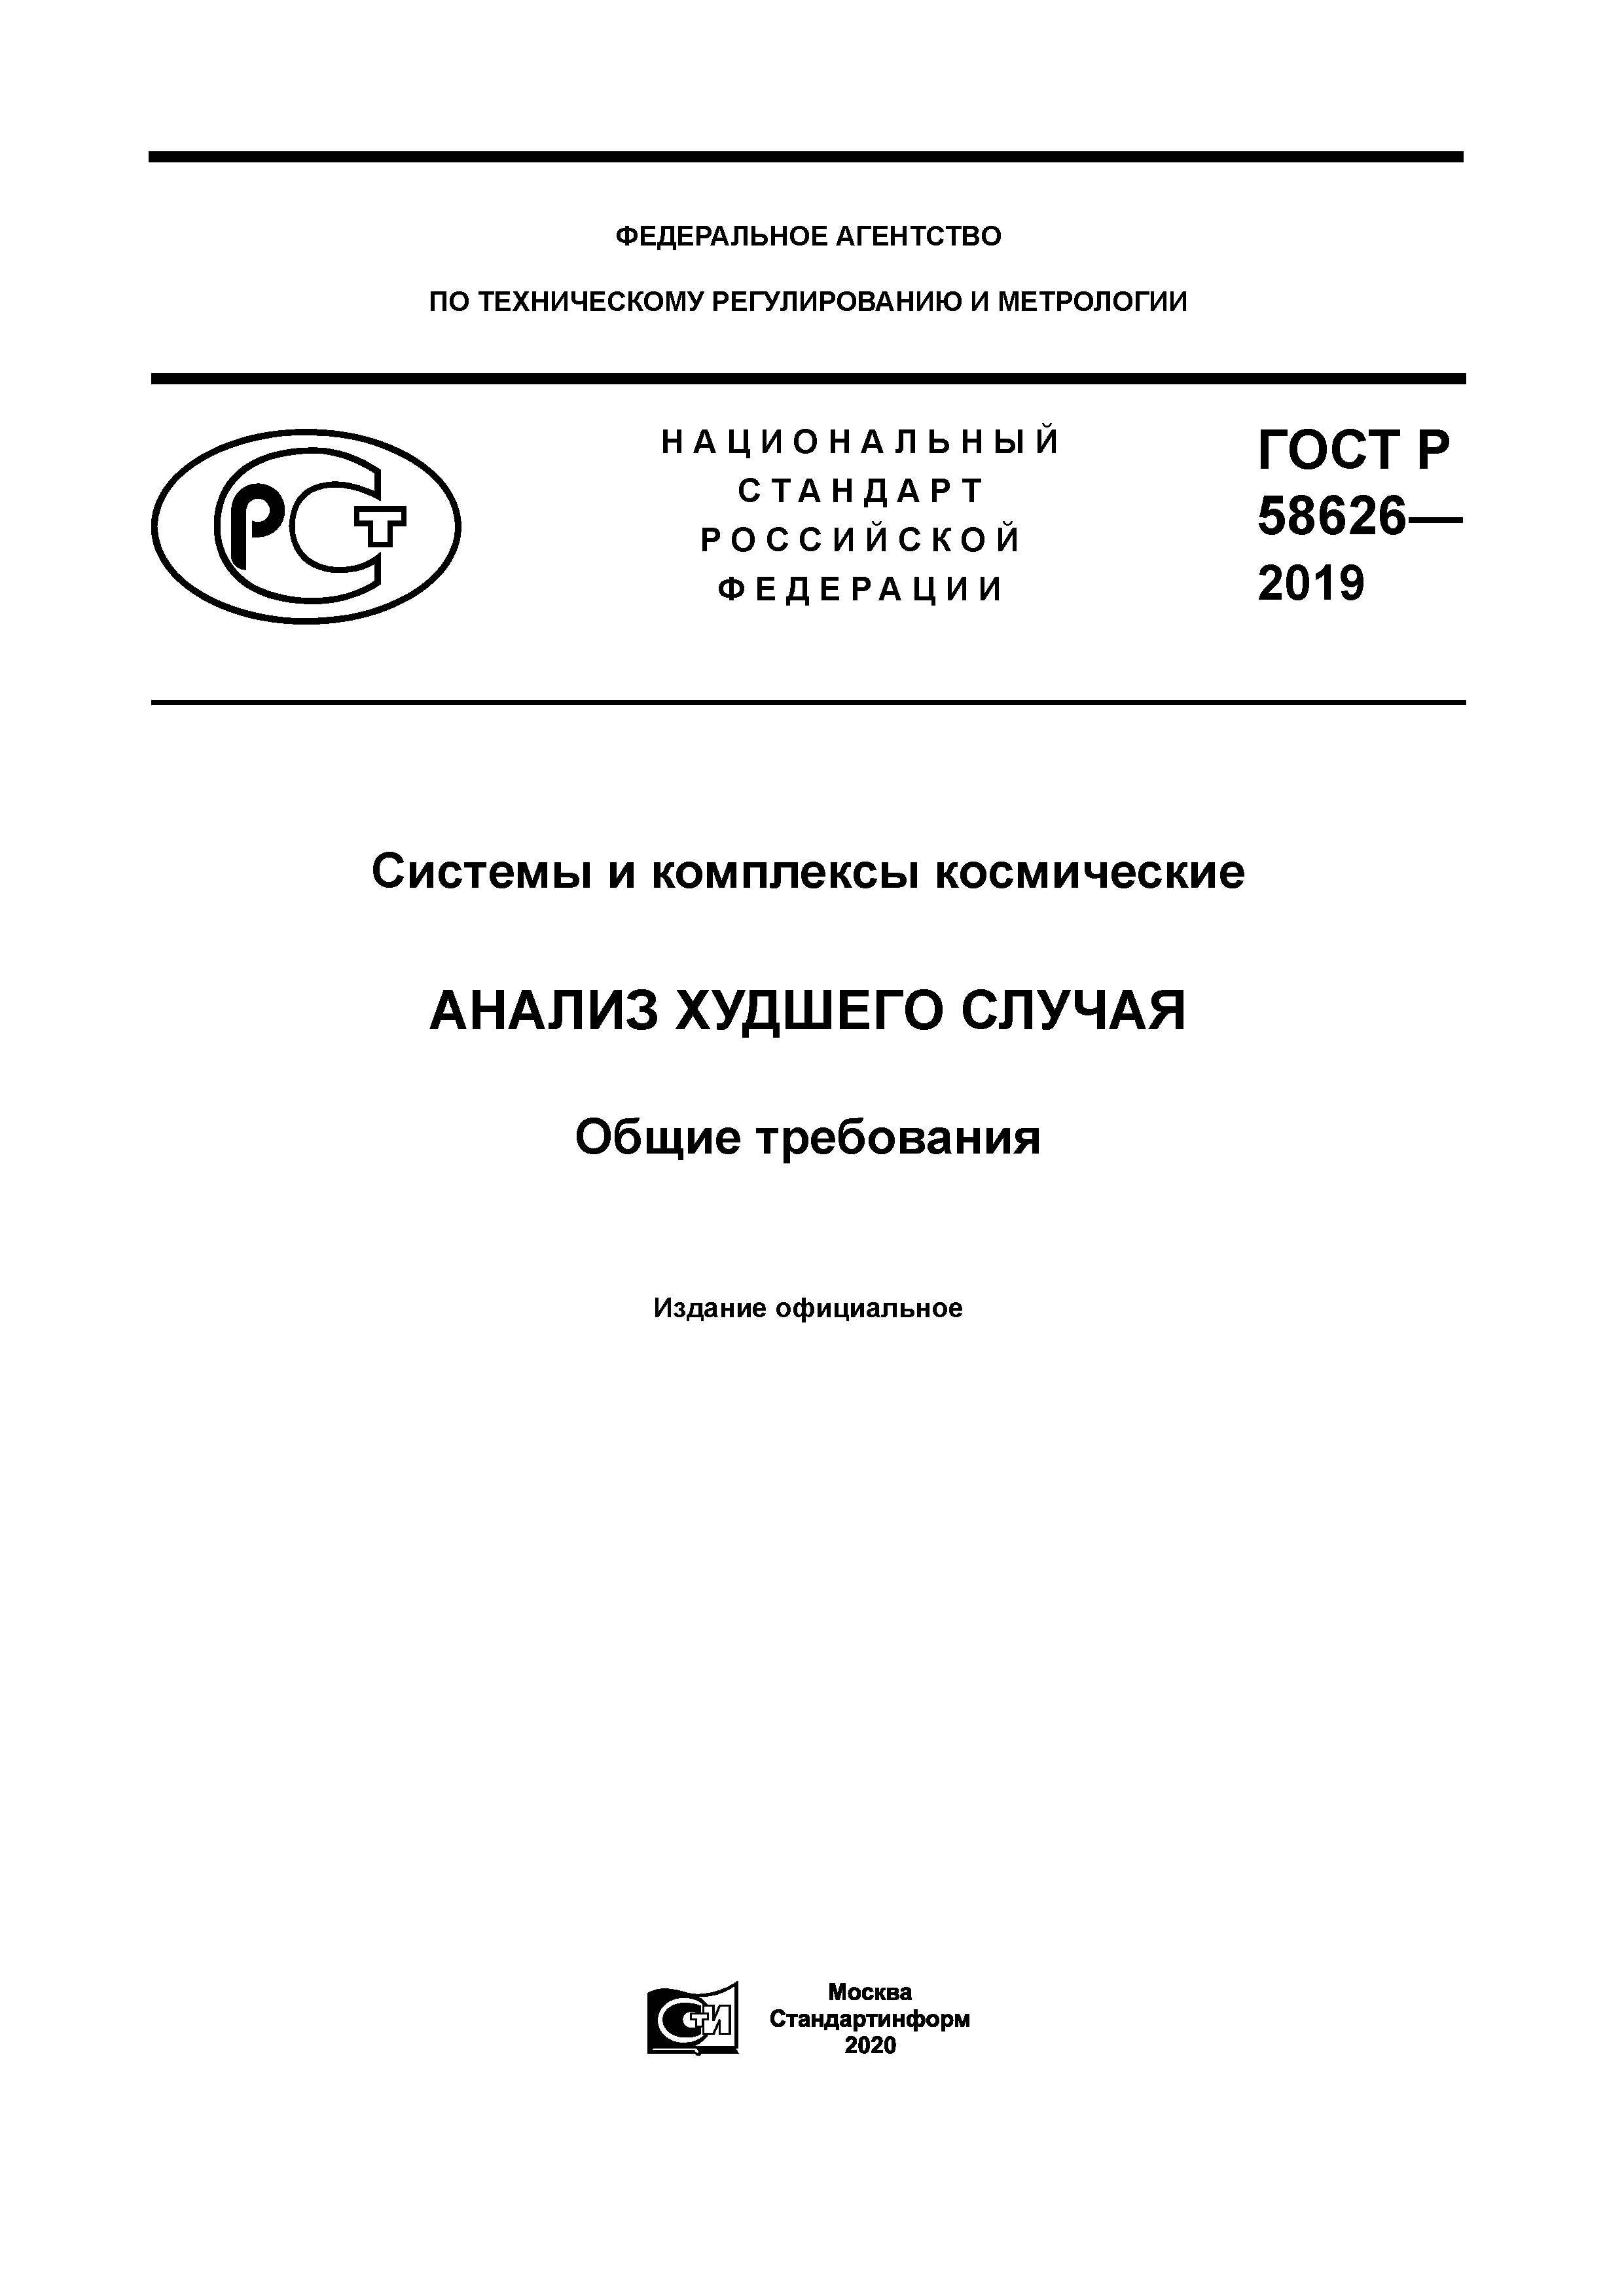 ГОСТ Р 58626-2019